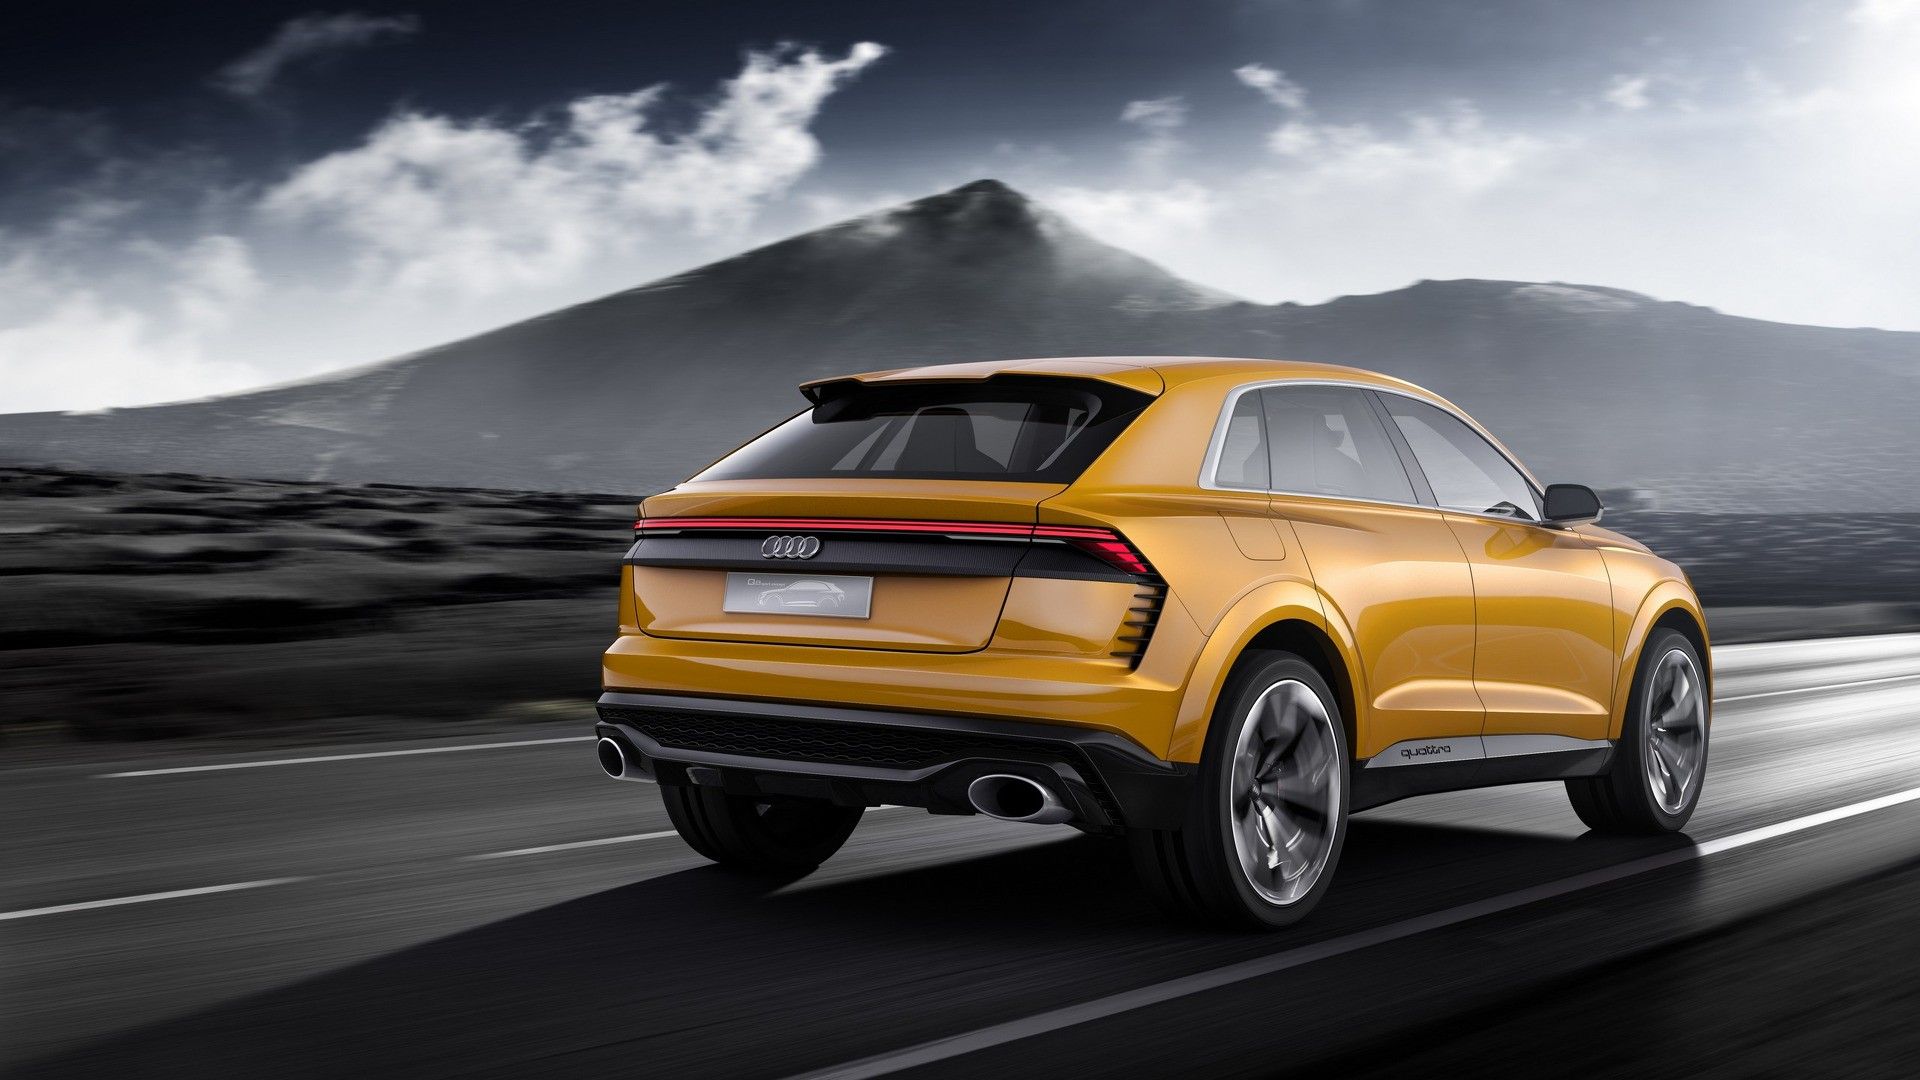 Unlock The Future With The 2017 Audi Q8 Concept